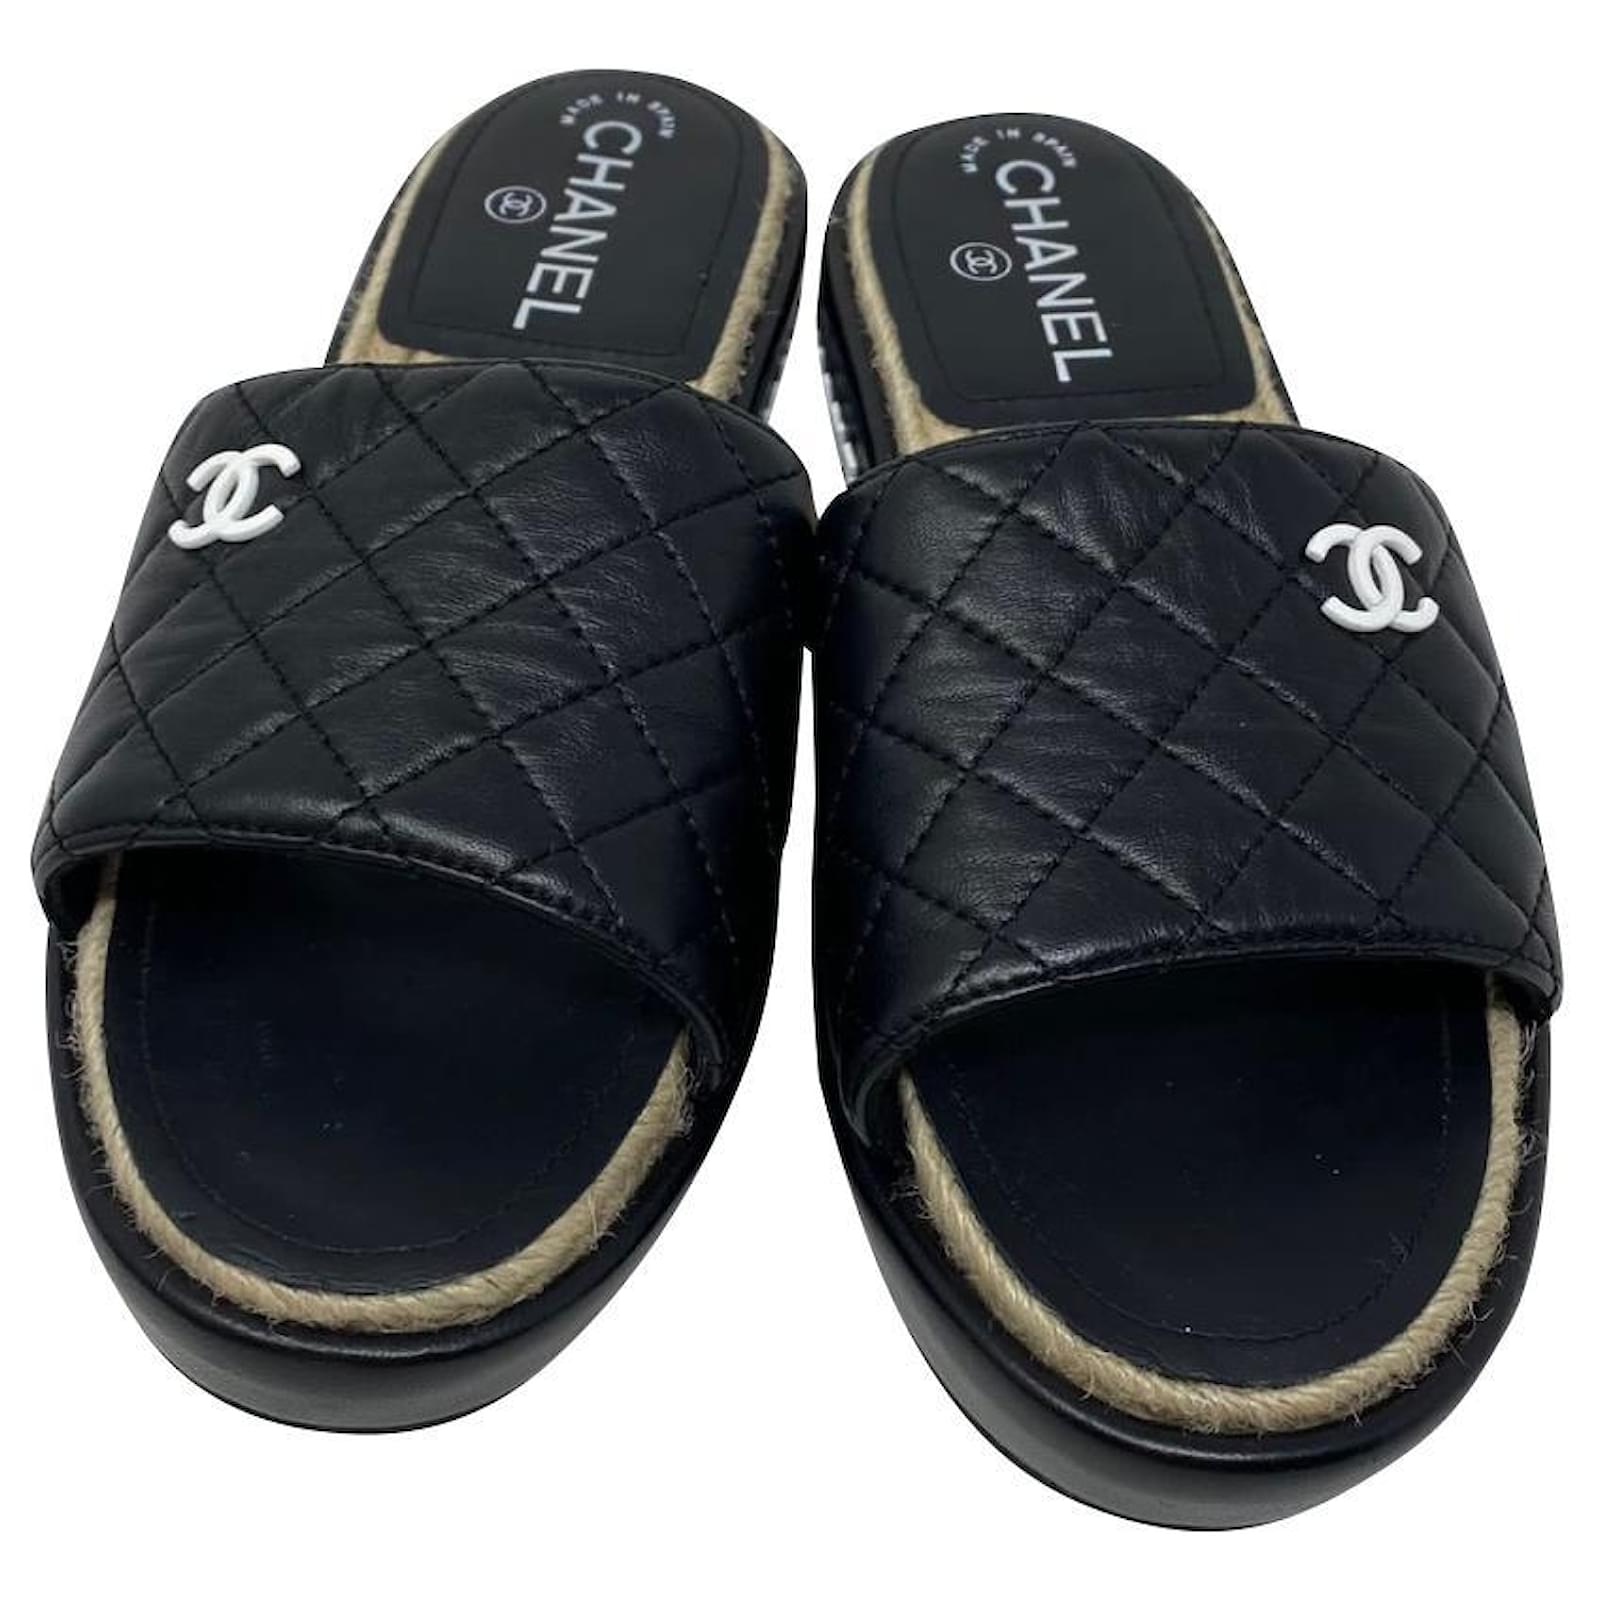 Sandals Chanel Size 38 It